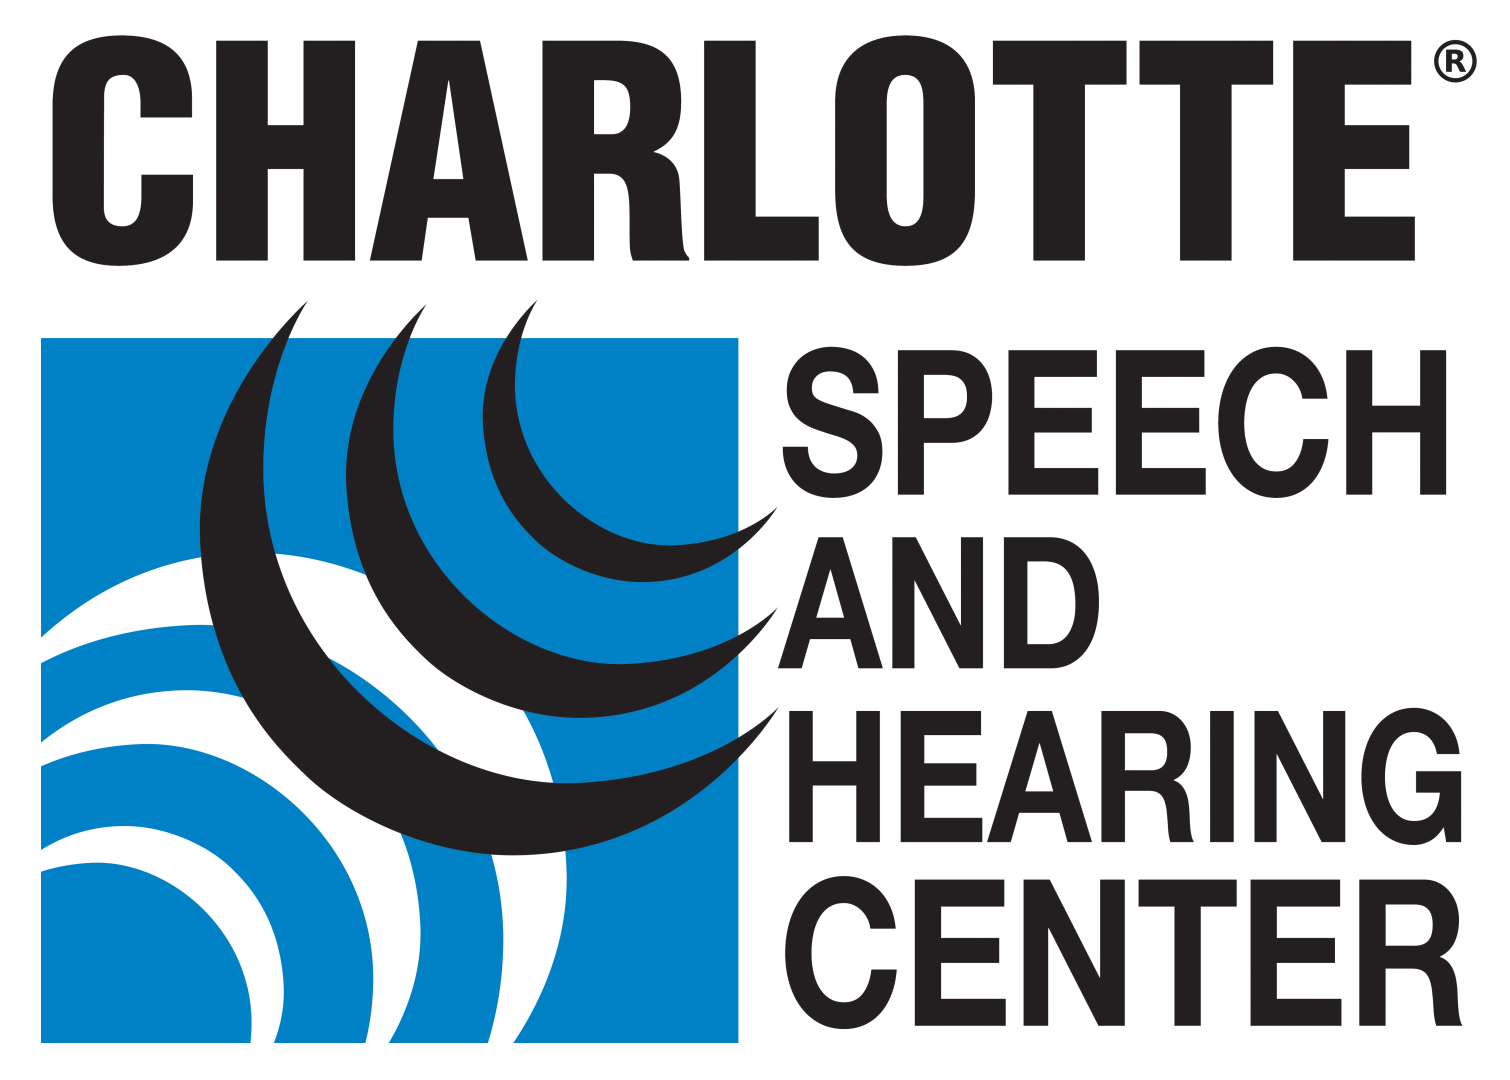 Charlotte Speech and Hearing Center logo